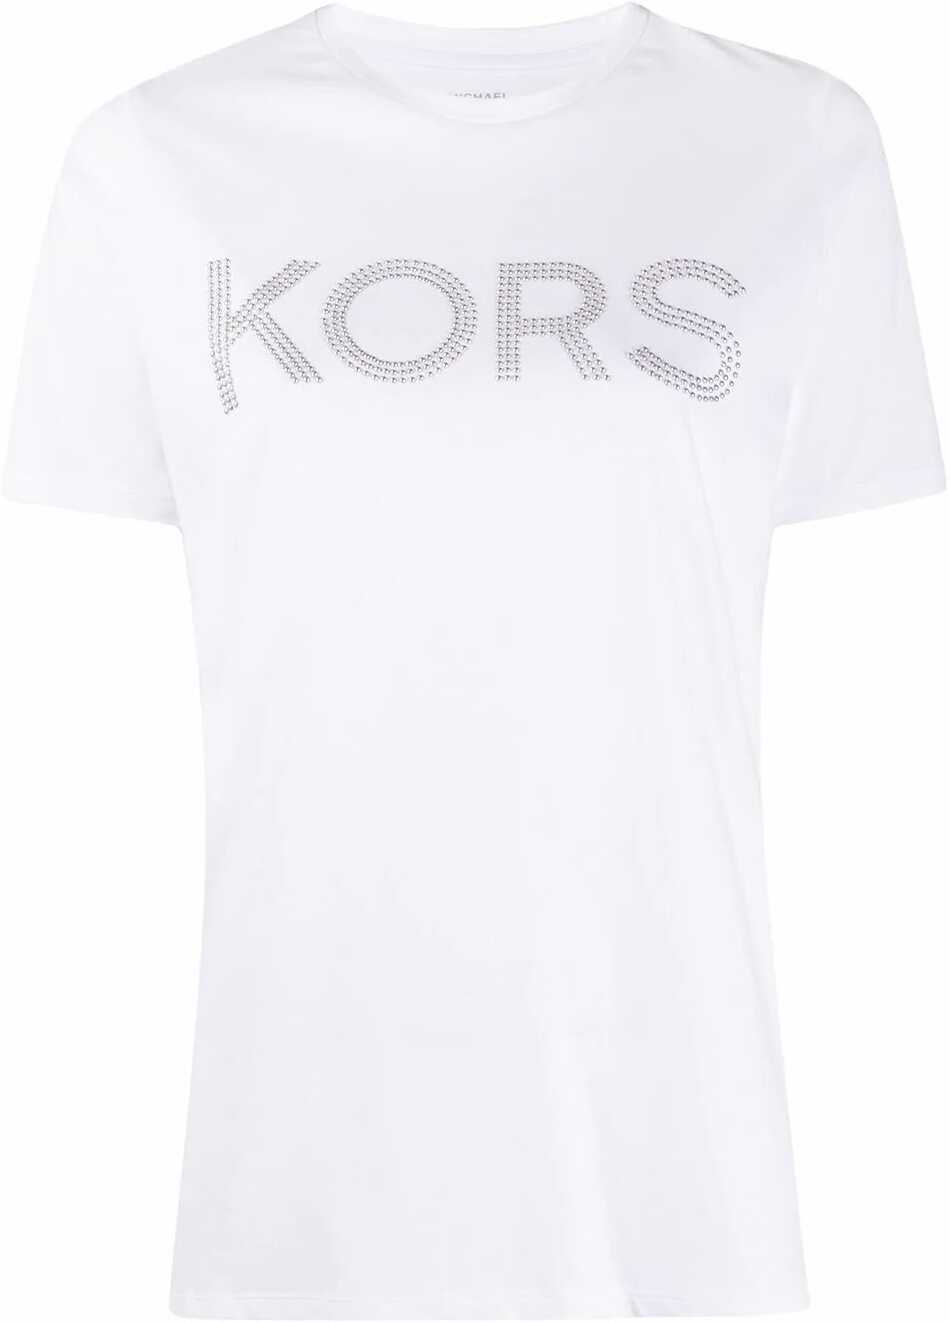 Michael Kors Cotton T-Shirt WHITE